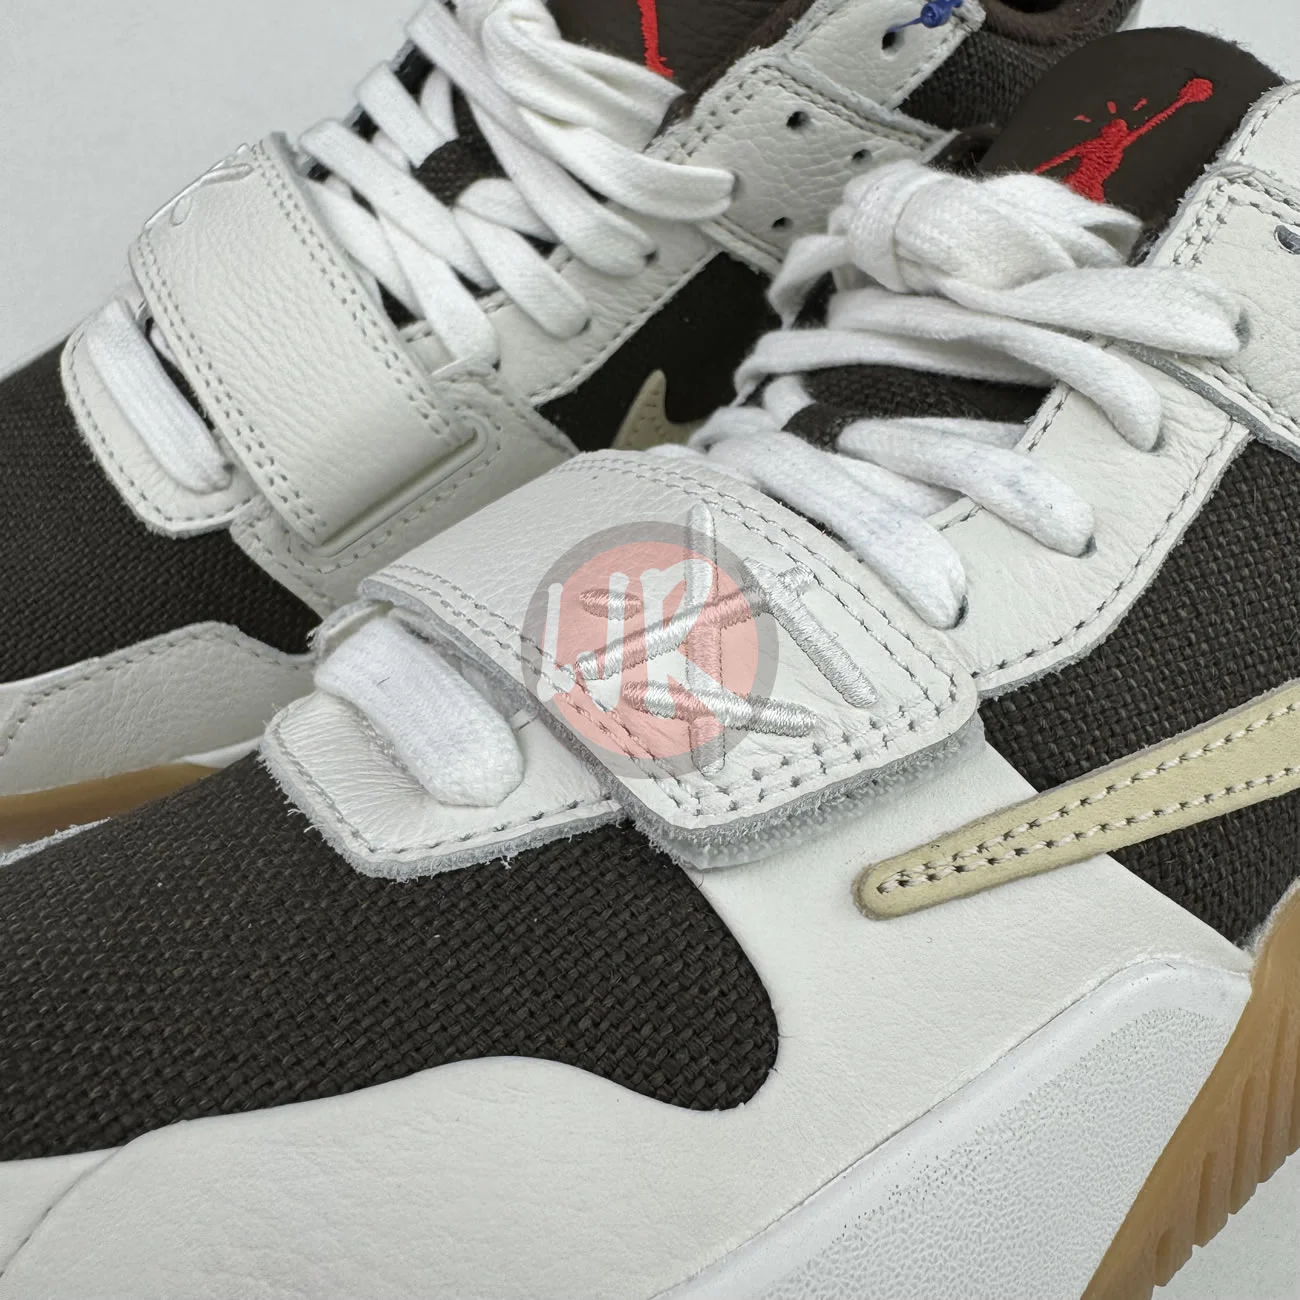 Travis Scott X Jordan Cut The Check Trainer Release Date Ljr Sneakers (13) - bc-ljr.com